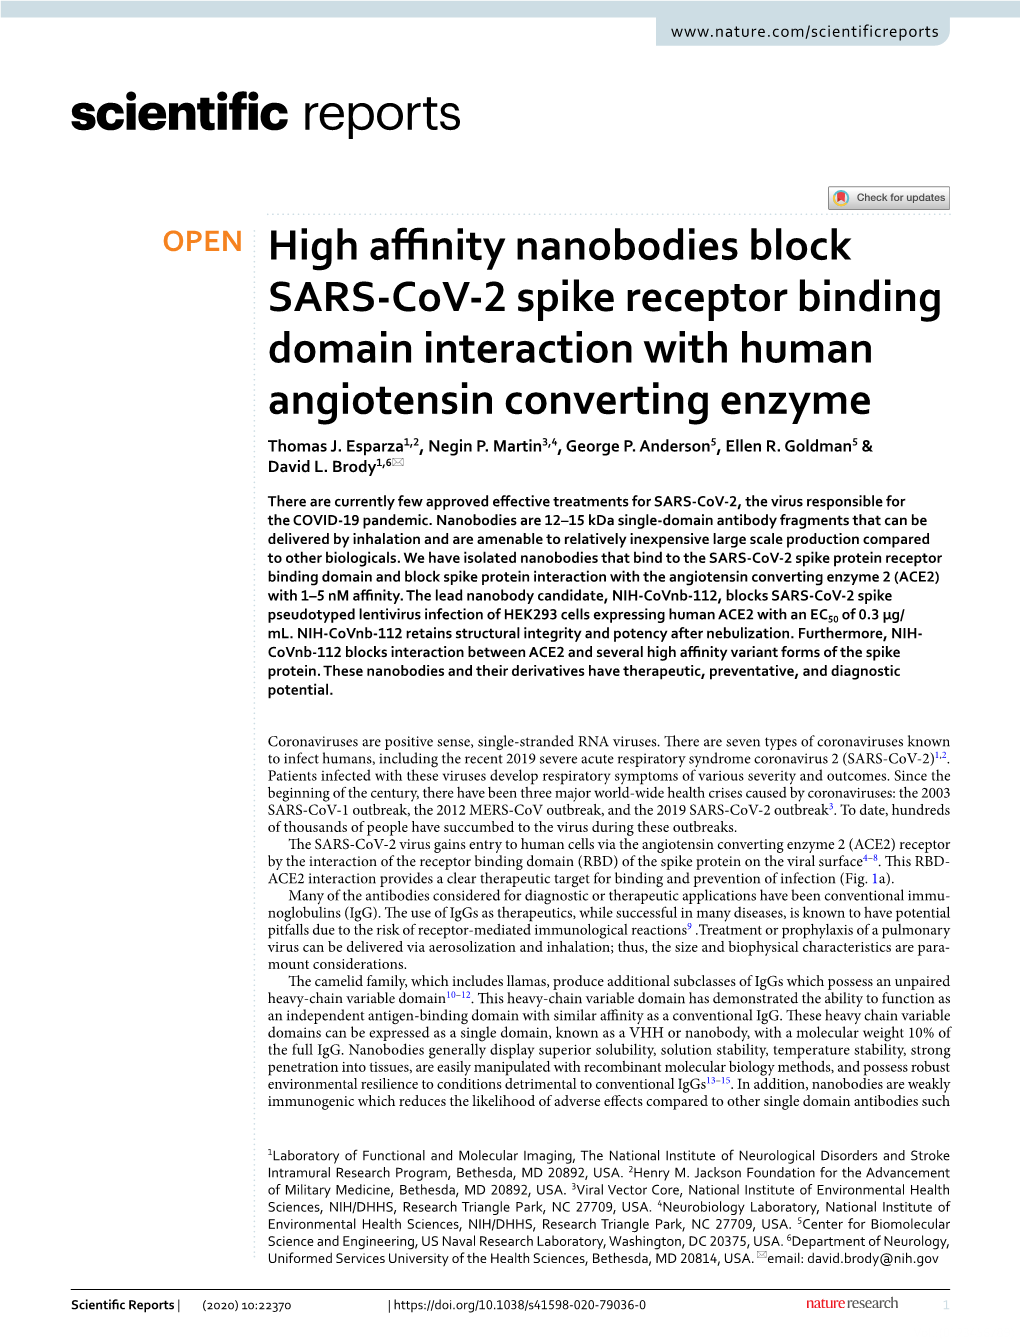 High Affinity Nanobodies Block SARS-Cov-2 Spike